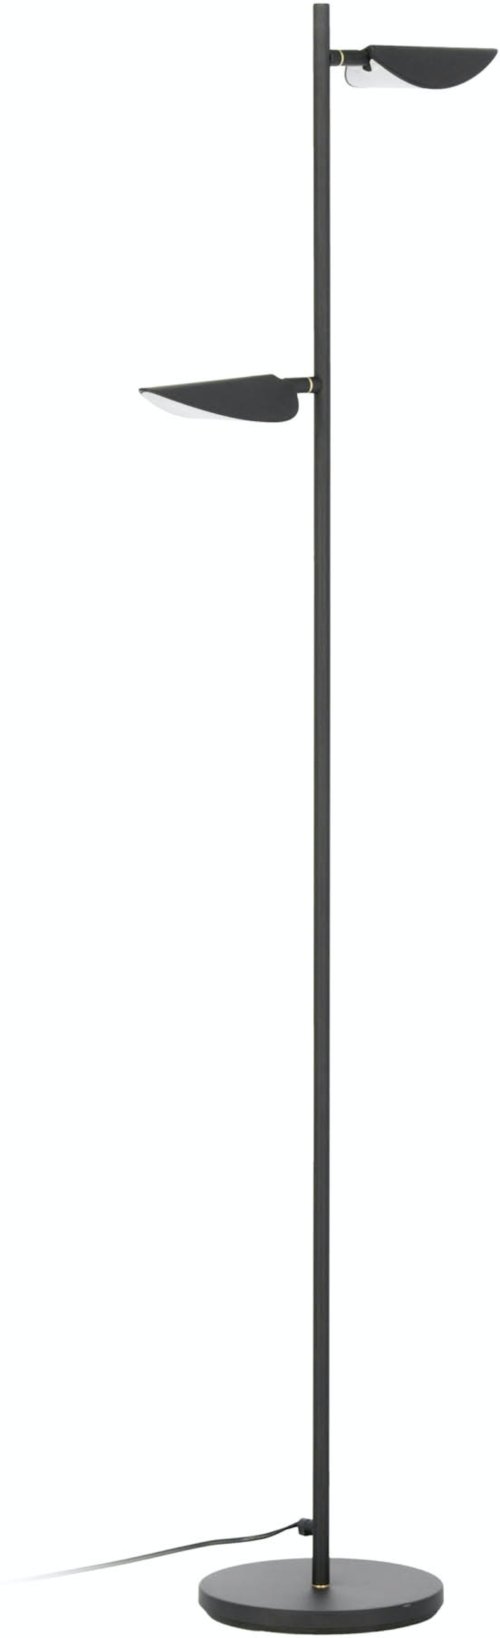 På billedet ser du variationen Veleira, Gulvlampe, moderne, metal fra brandet Laforma i en størrelse H: 150 cm. x B: 42 cm. x L: 23 cm. i farven Sort